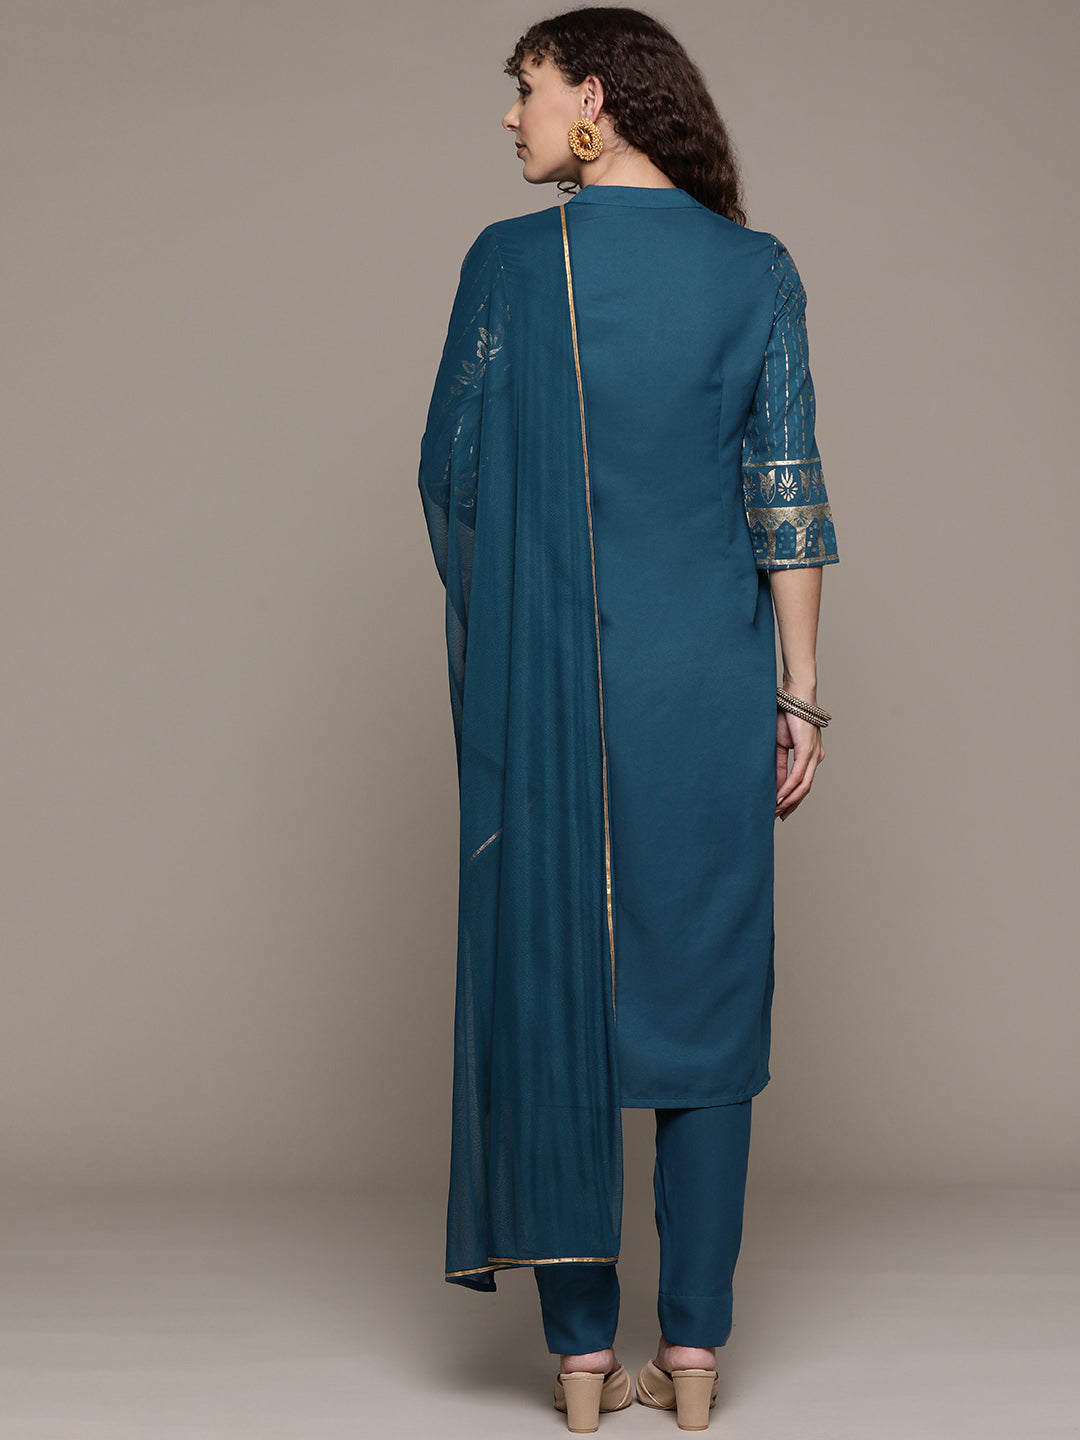 Women's Teal Blue Rayon Kurta, Pant And Dupatta Set - Ziyaa